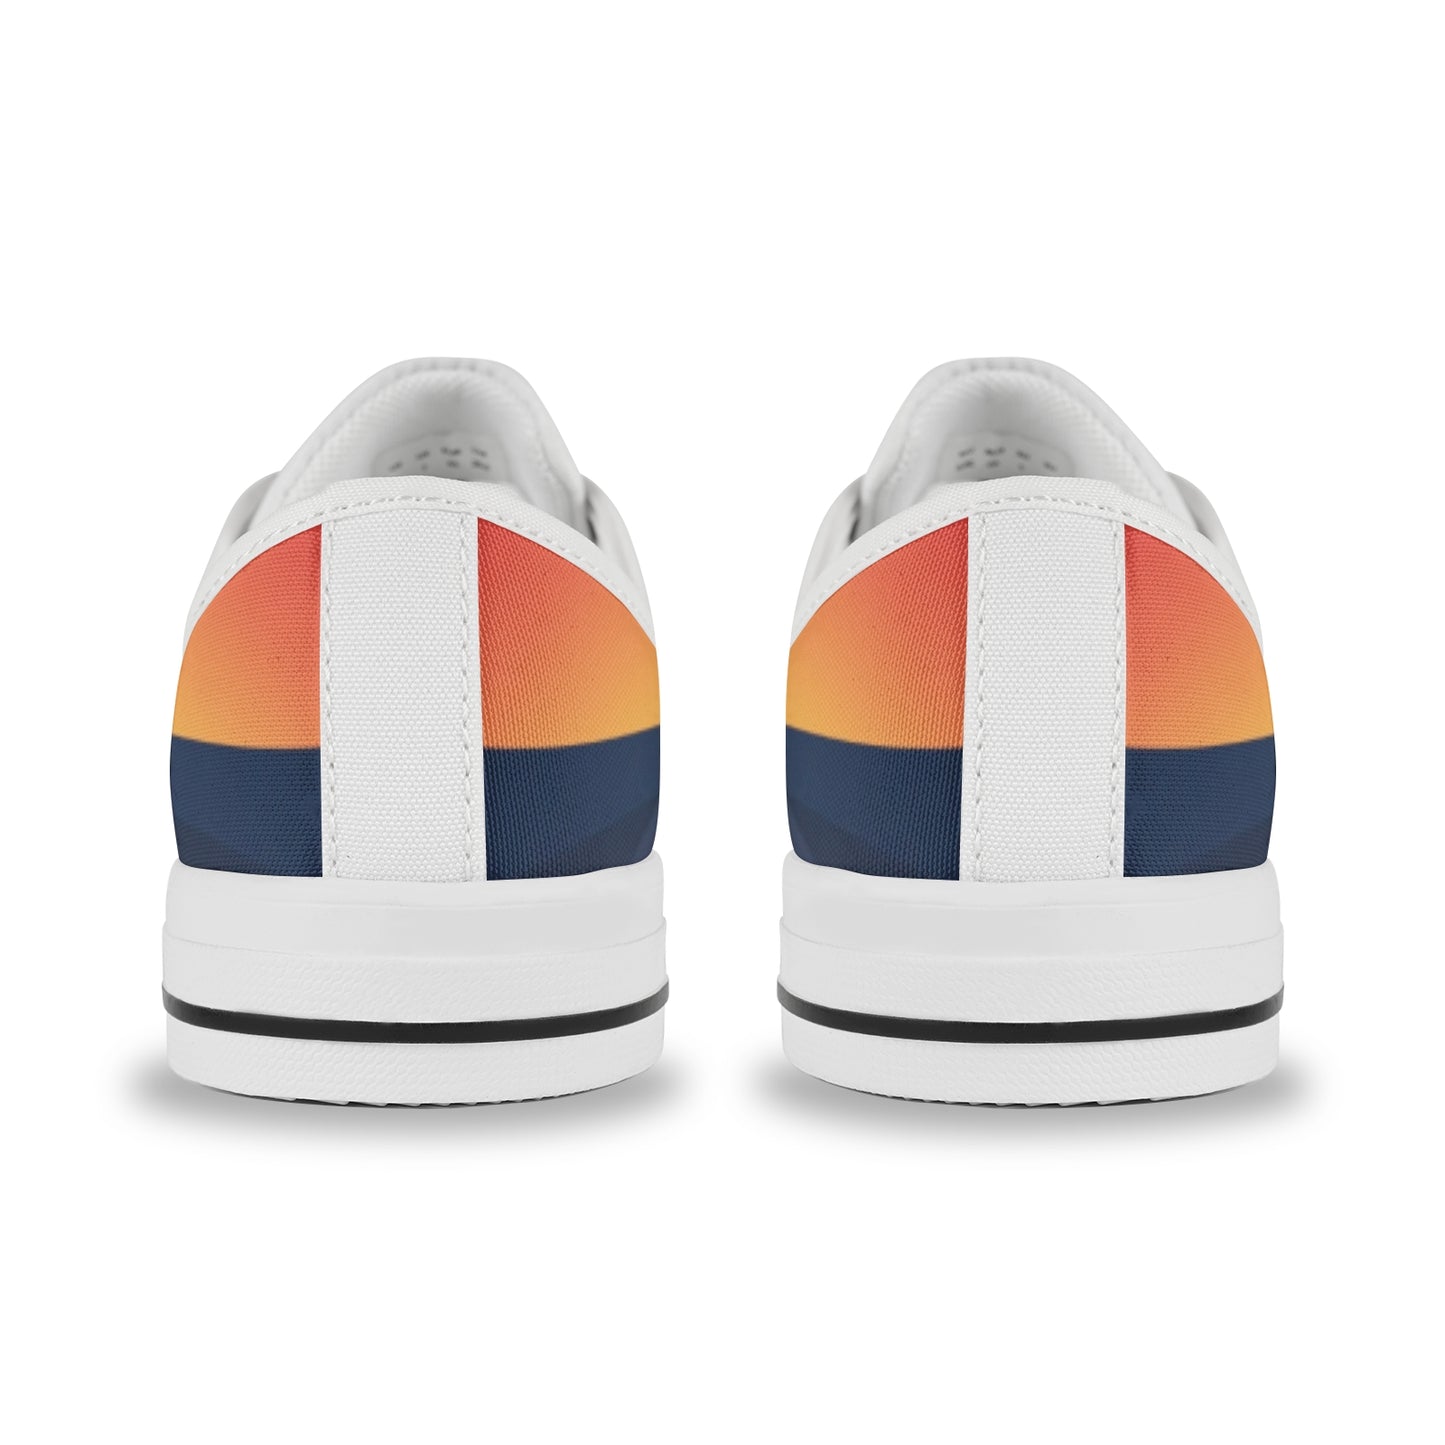 Men's Canvas Sneakers - Blue/Orange Combo